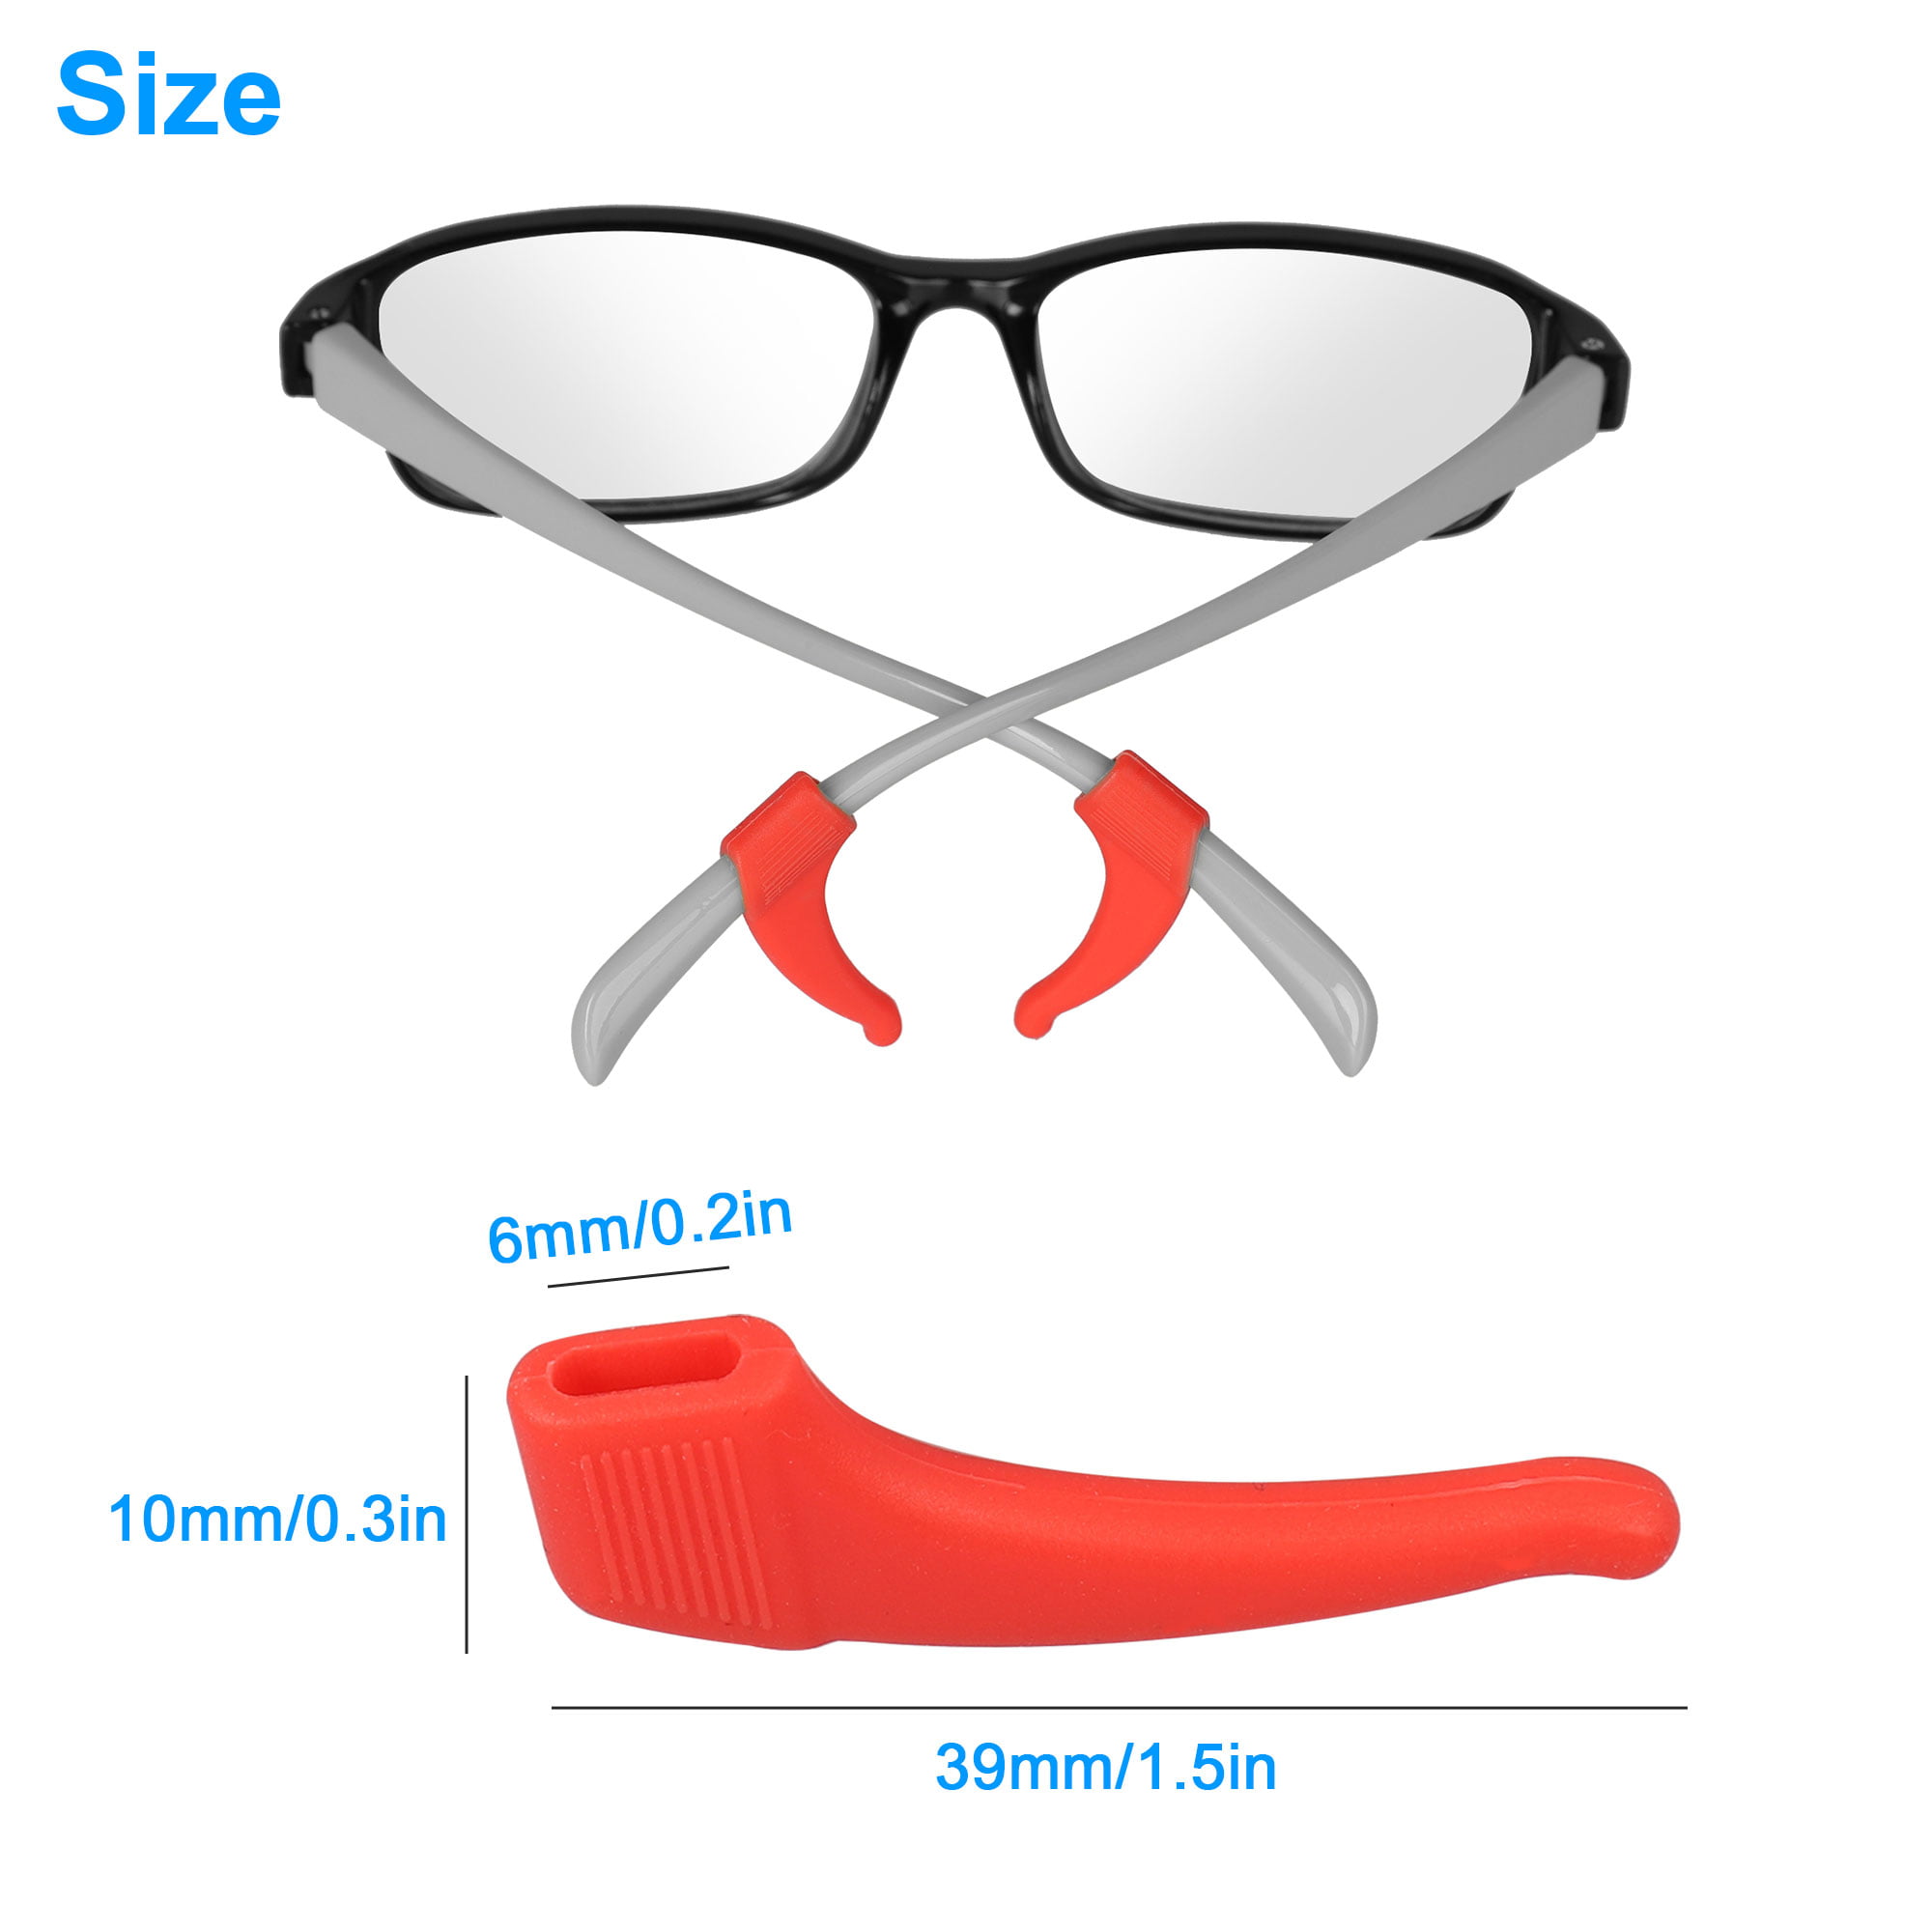 Silicone Eyeglass Holders Set Eyeglass Chain Holders Eyeglass Grip